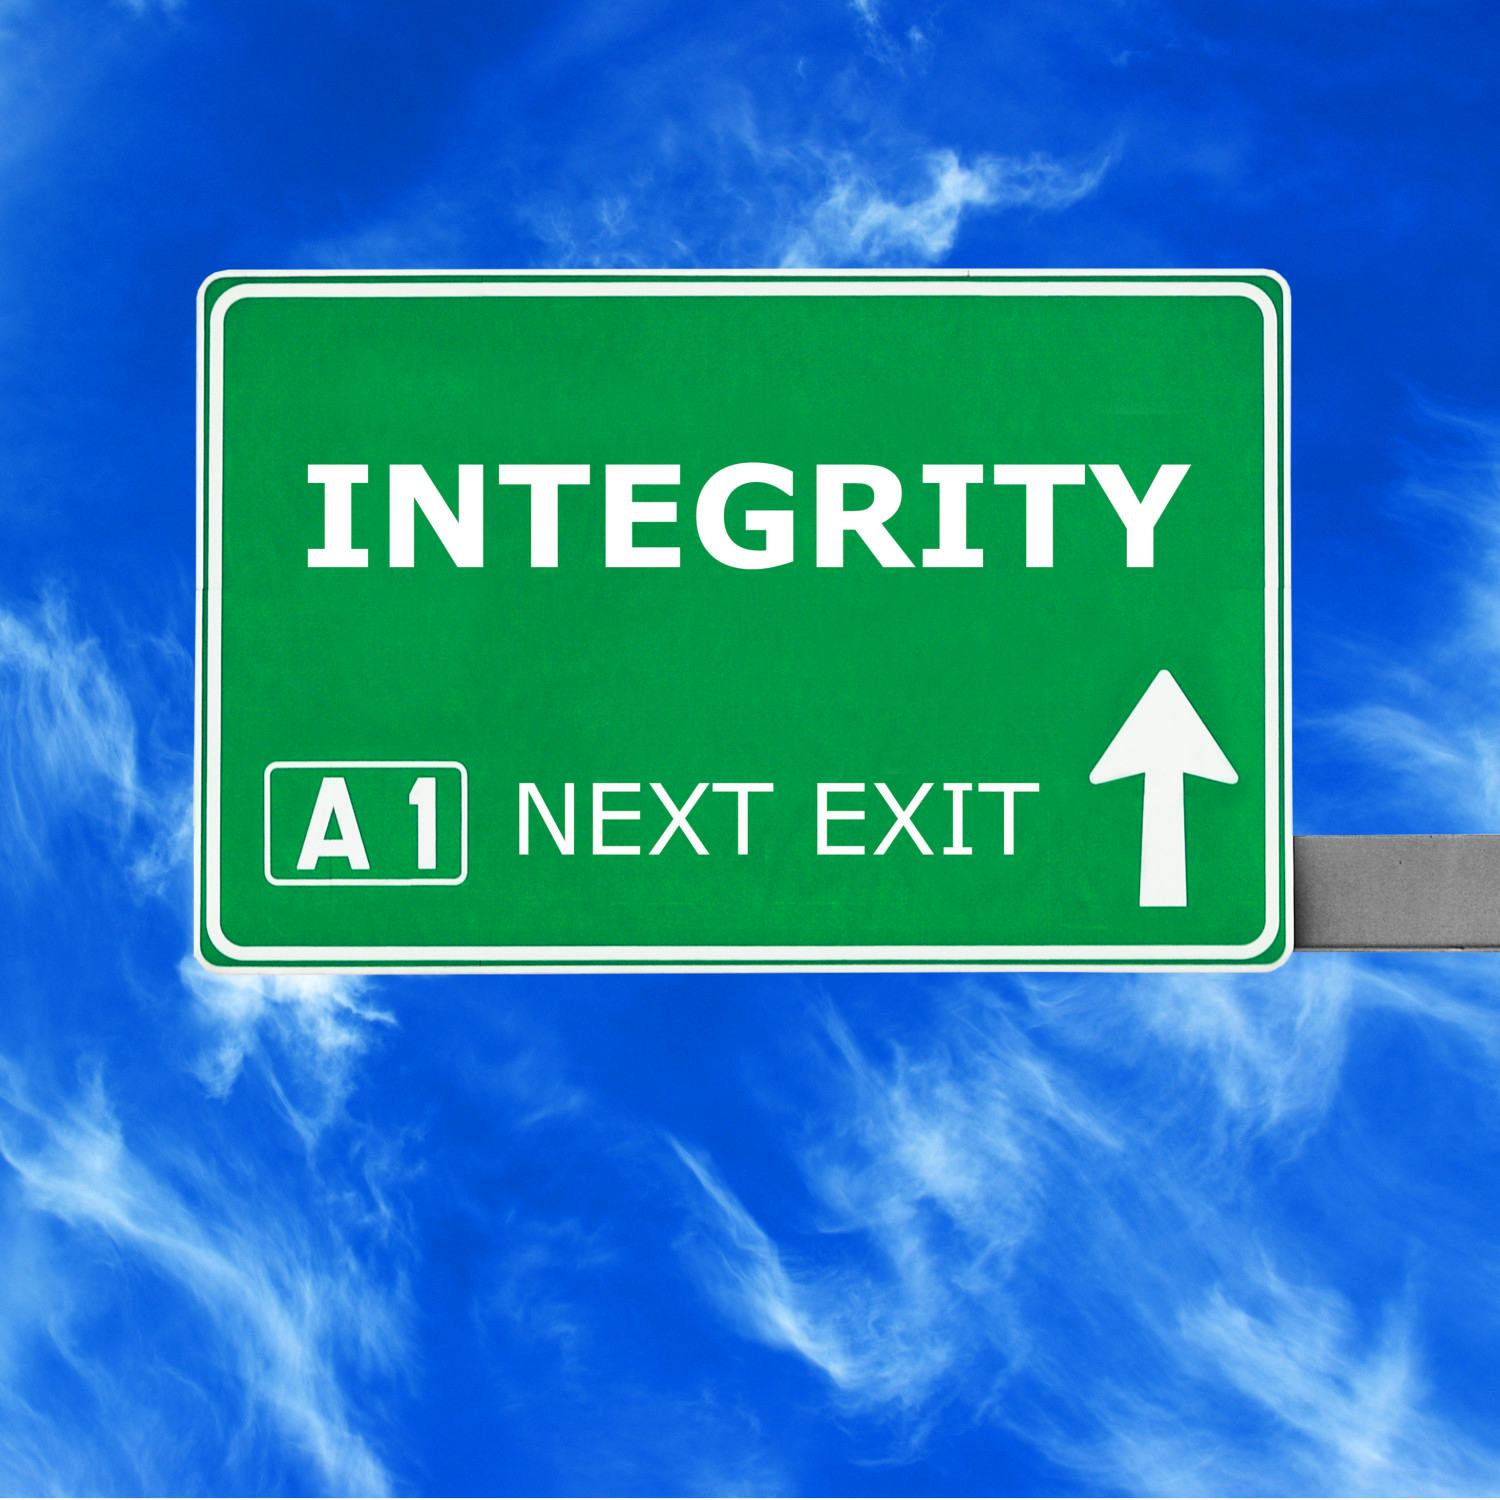 3 misverstanden over integriteit